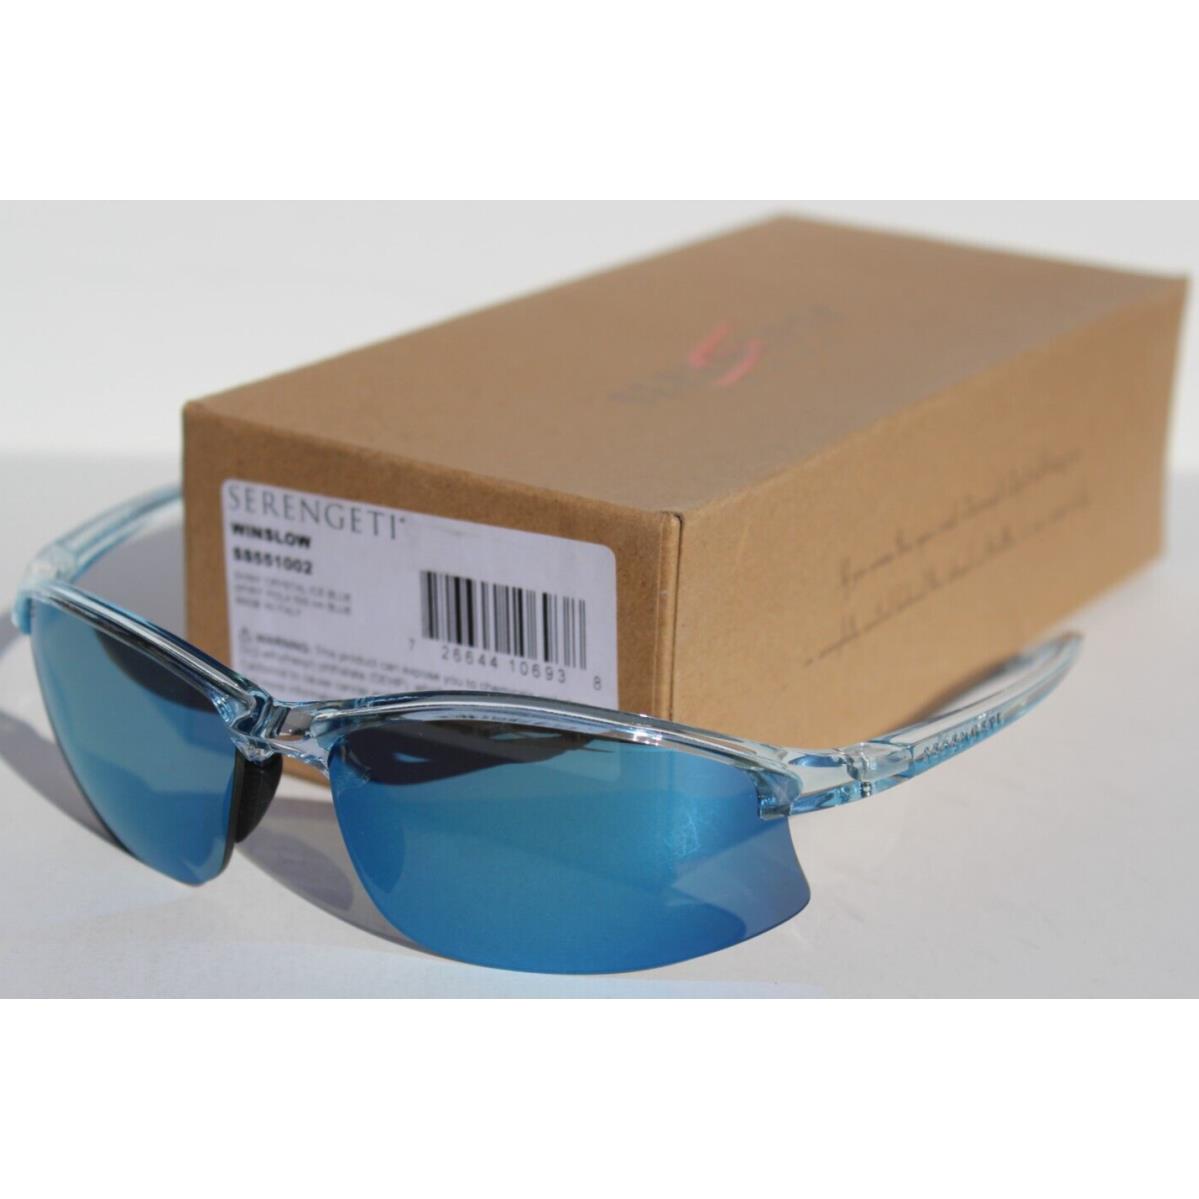 Serengeti Winslow Polarized Sunglasses Crystal Ice/blue 555nm SS551002 Italy